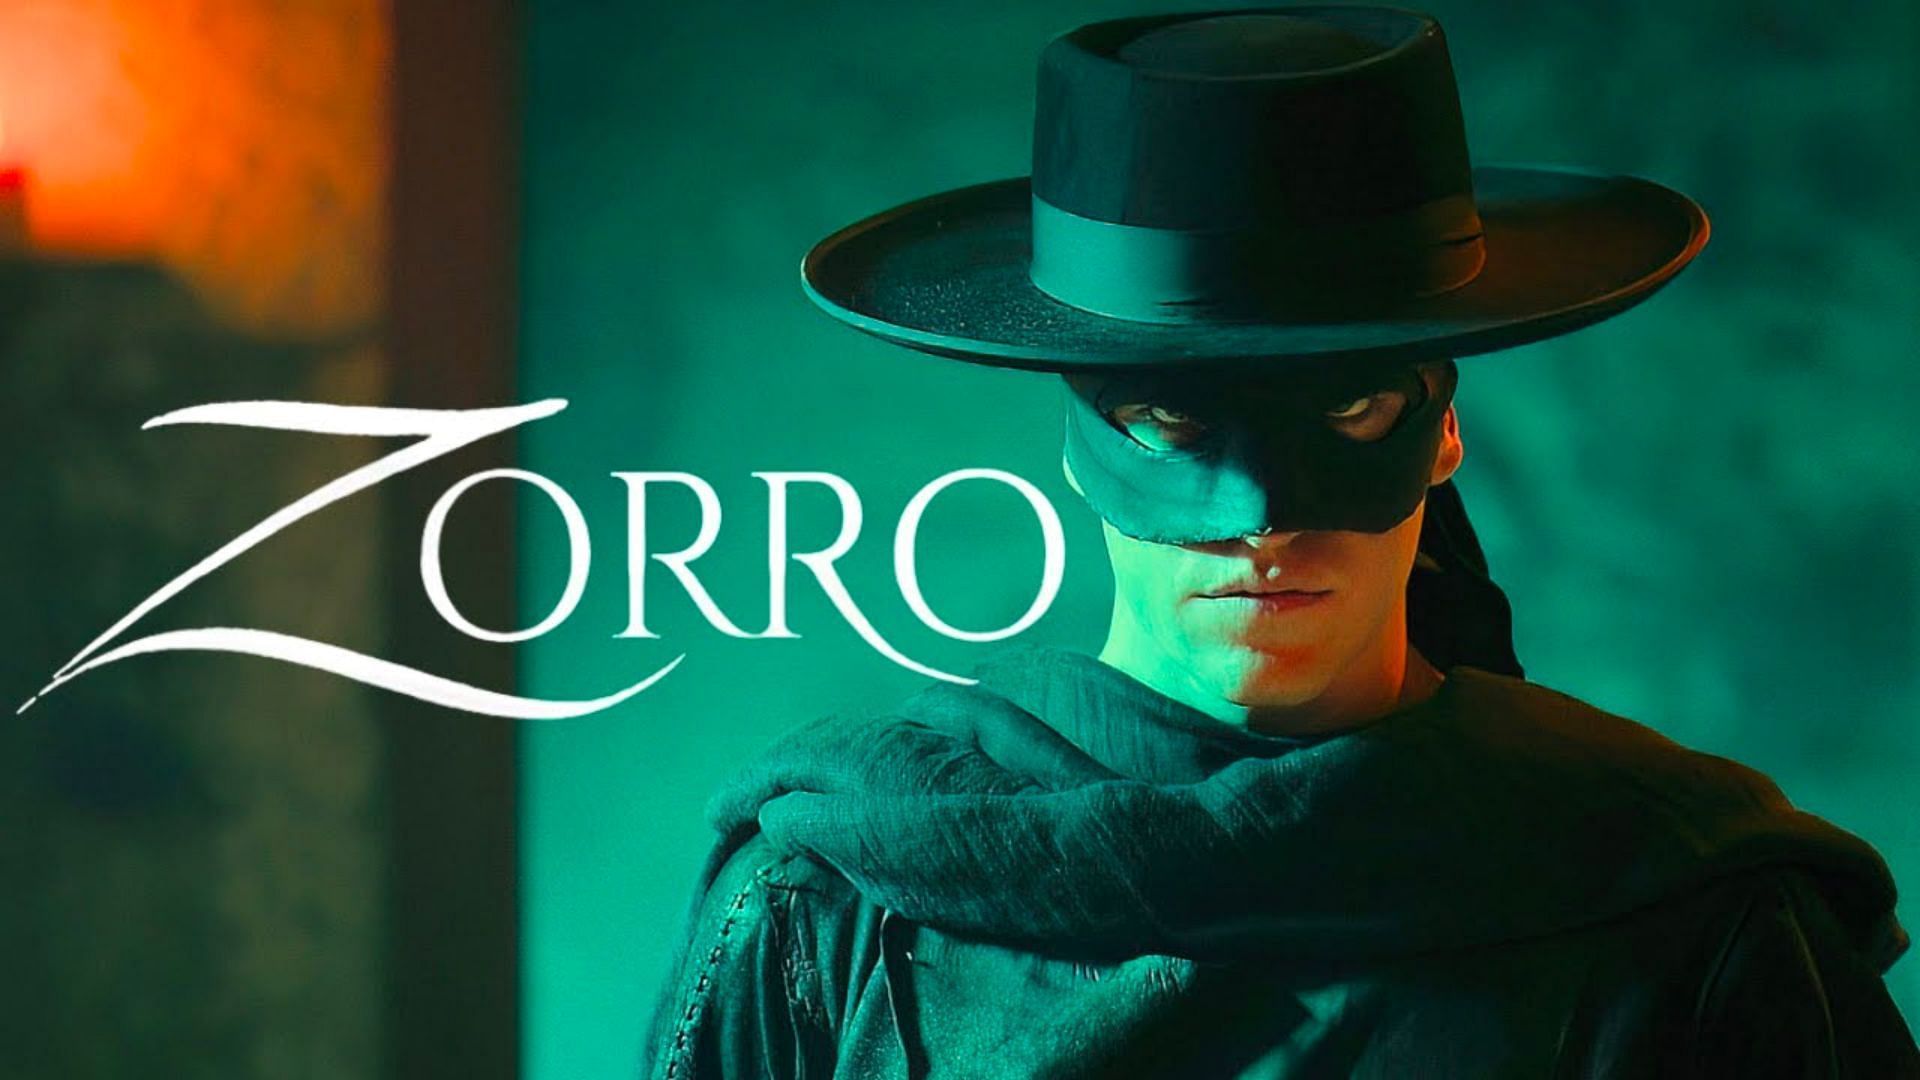 Amazon Prime&#039;s Zorro, Miguel Bernardeau plays Diego de la Vega (image via EMB Trailer, thumbnail)